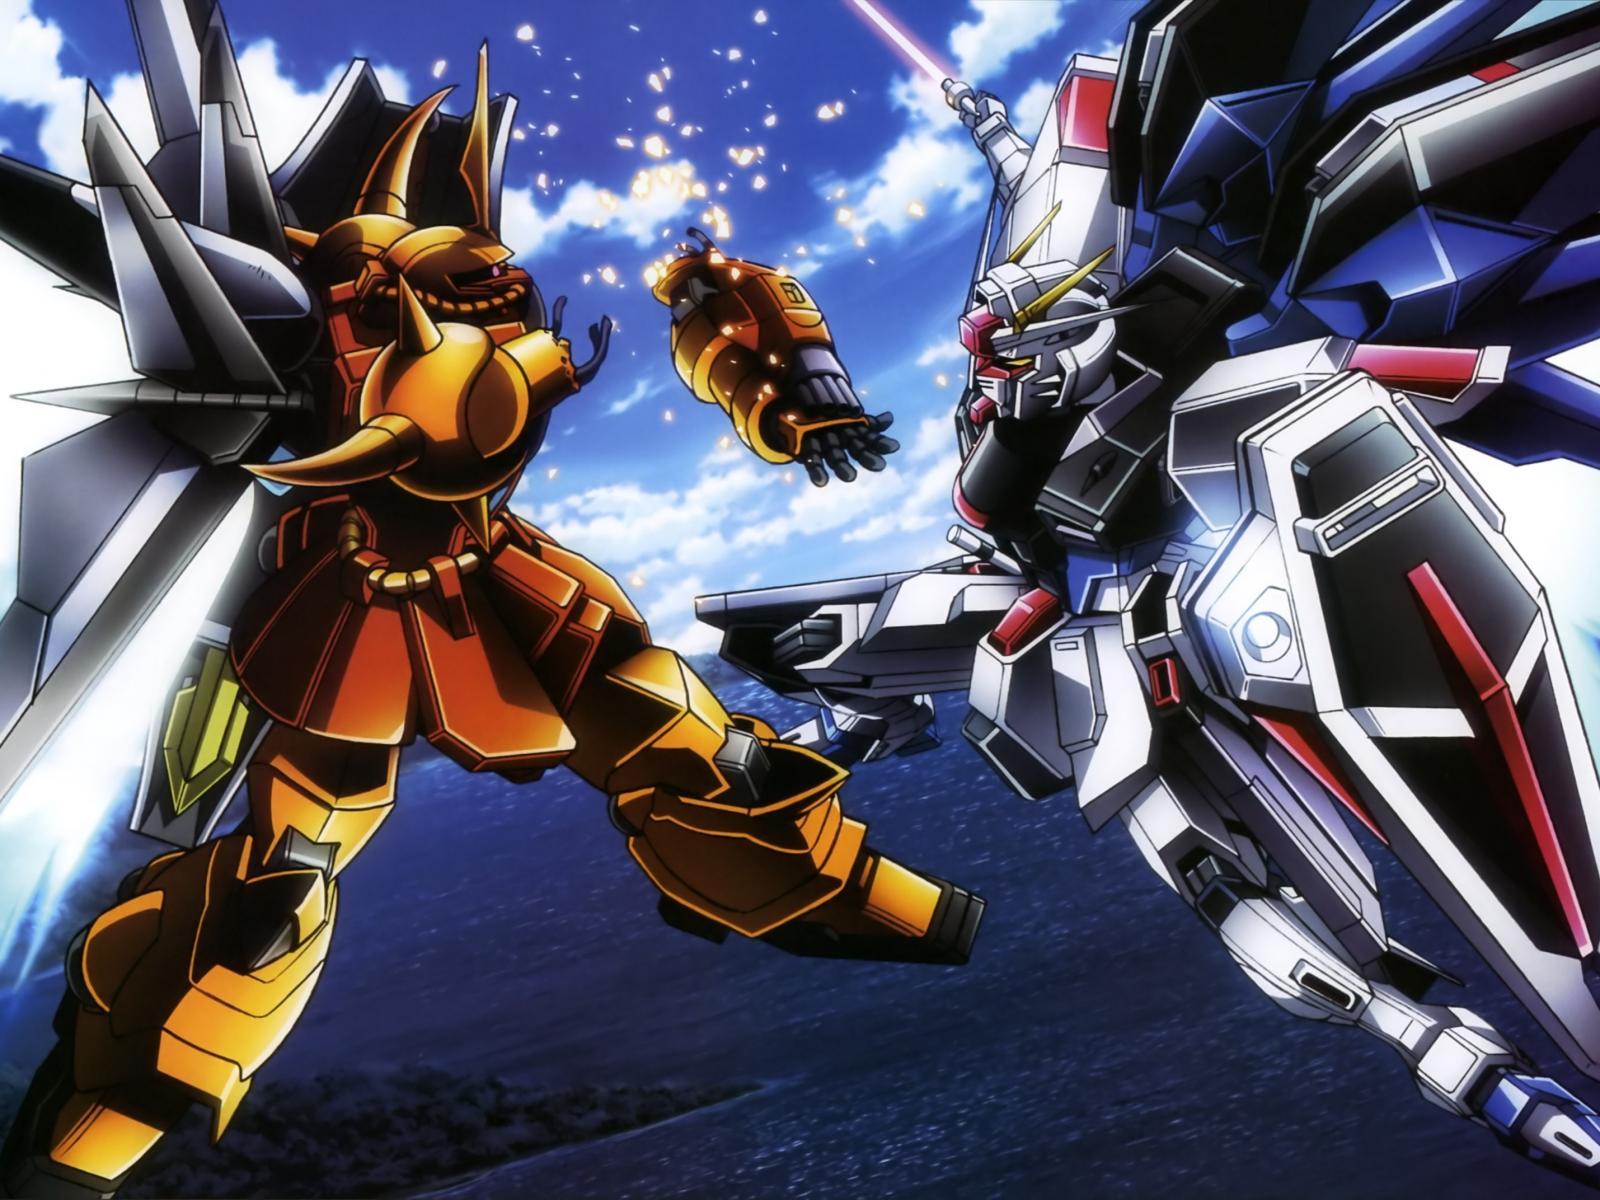 Mobile Suit Gundam Wallpapers Top Free Mobile Suit Gundam Backgrounds Wallpaperaccess